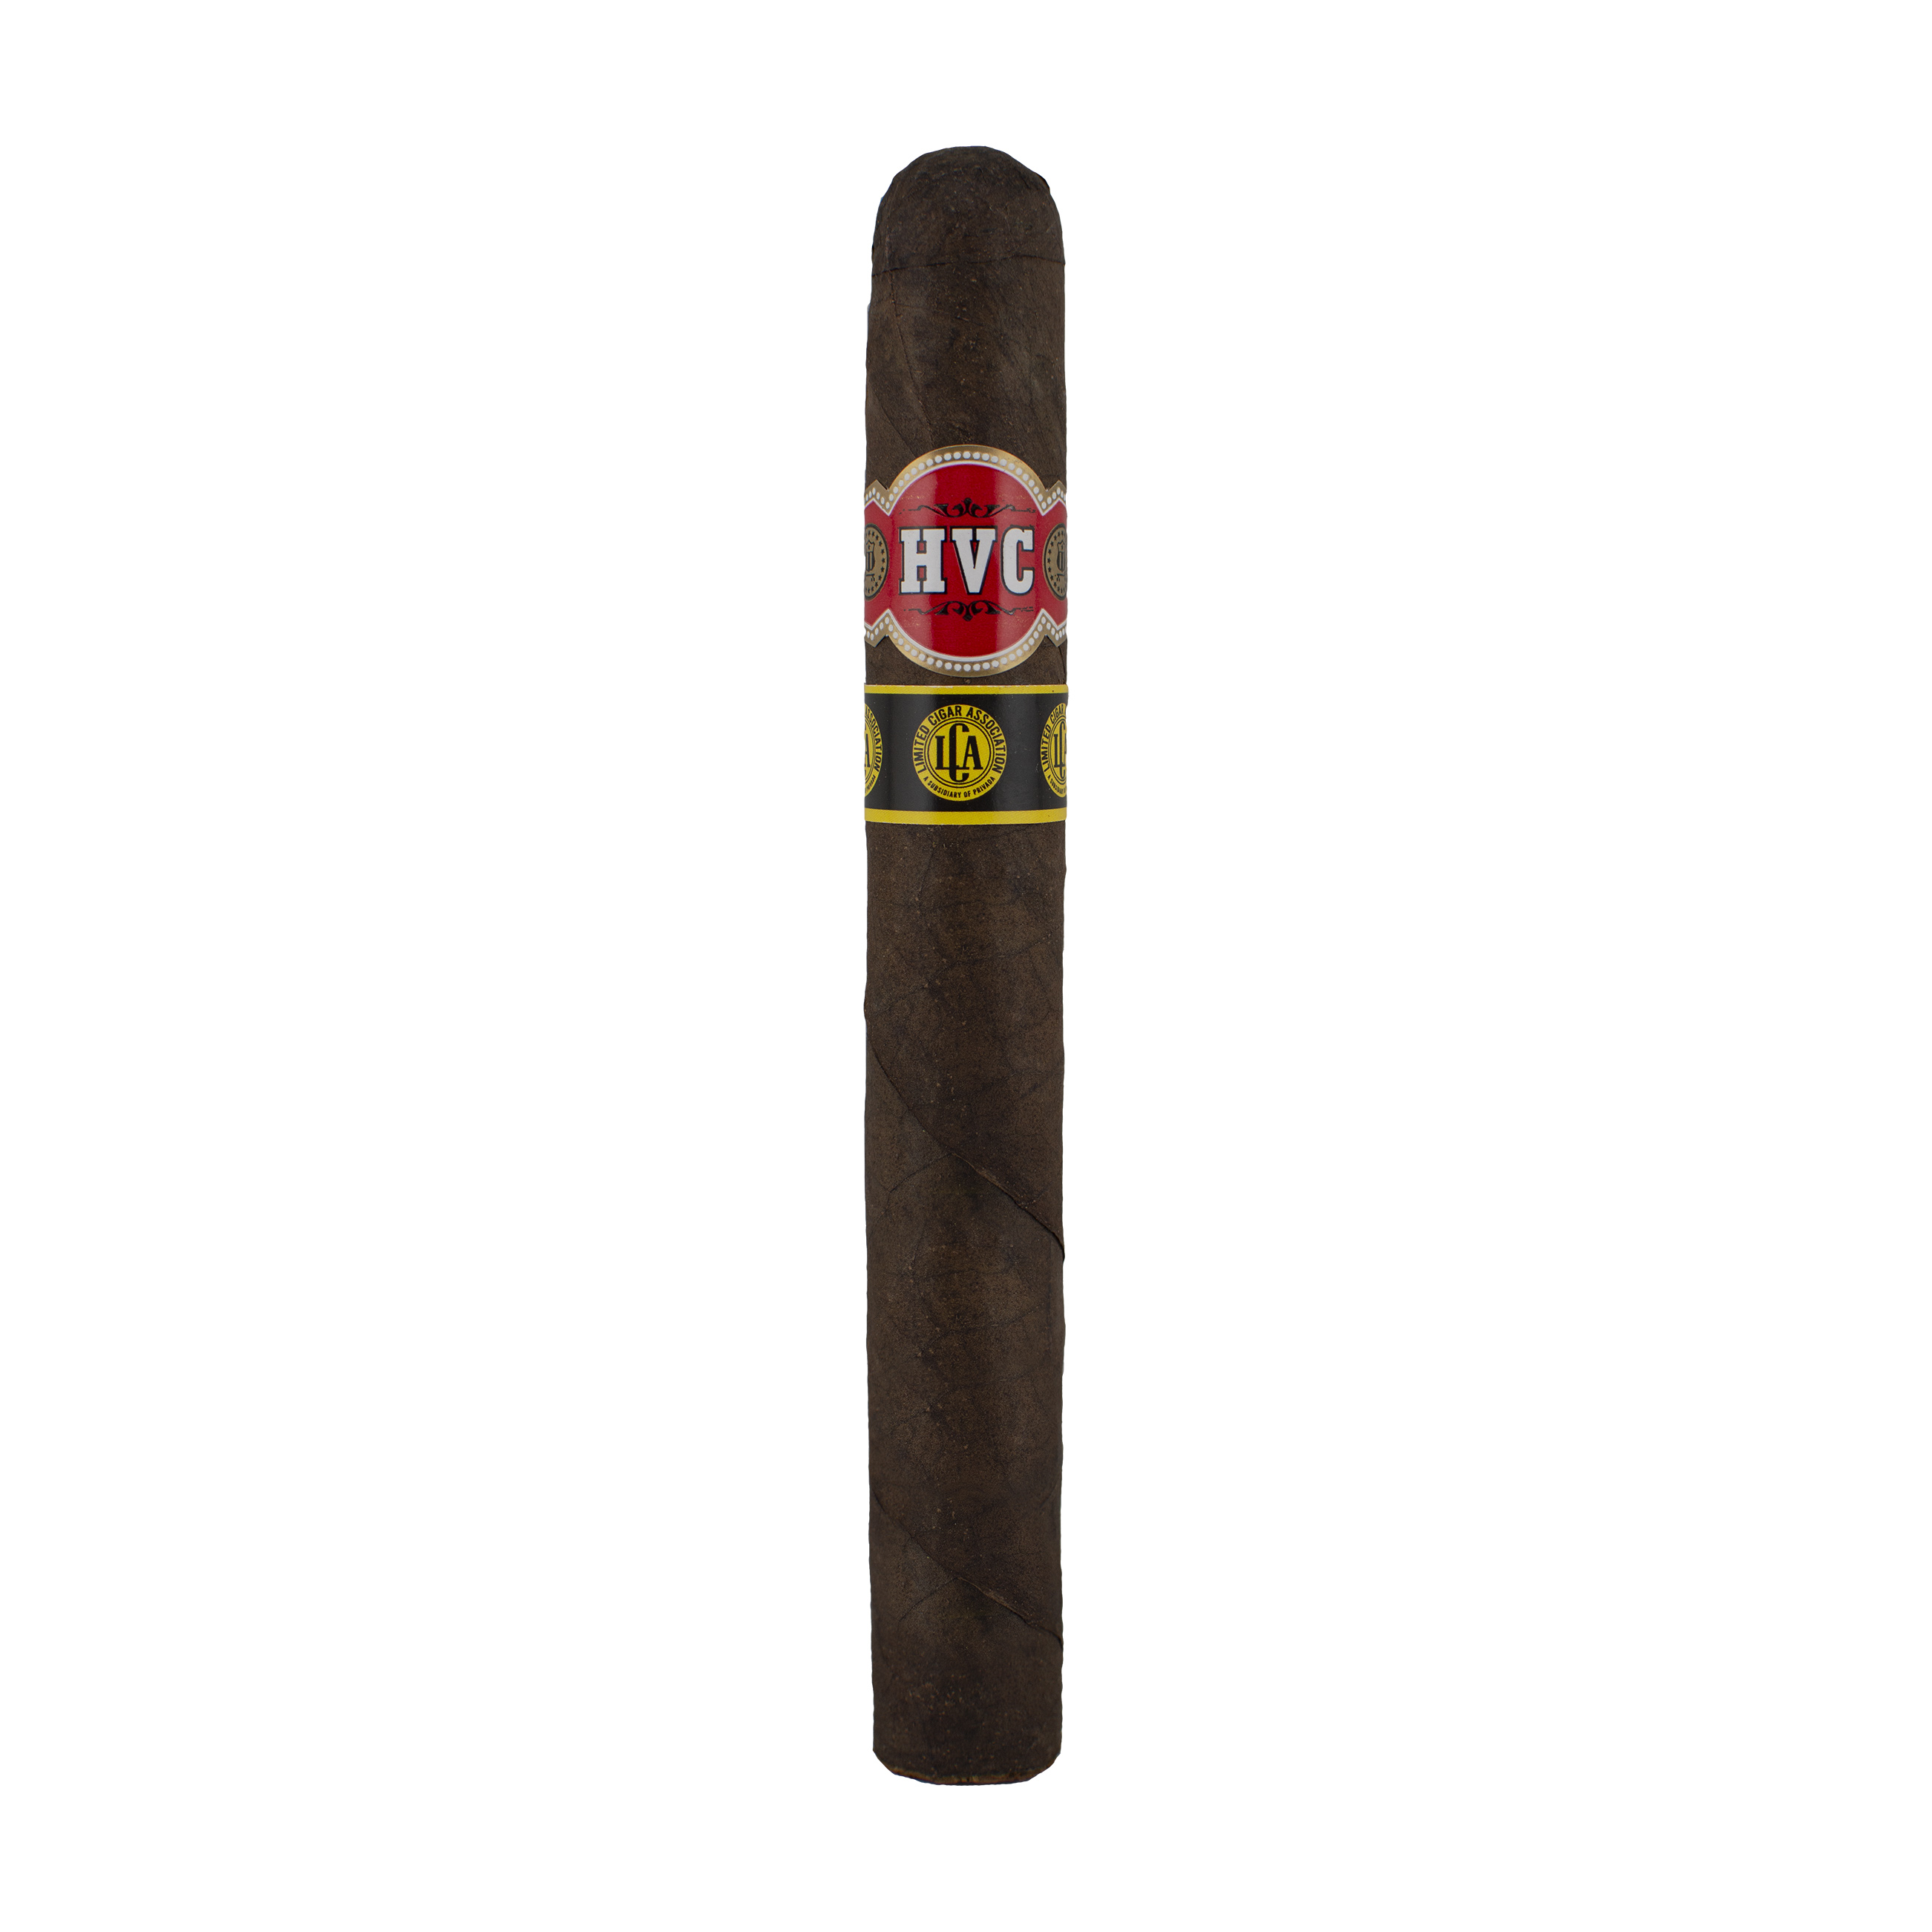 The Reinier Lorenzo LCA Masterpiece Cigar - Single